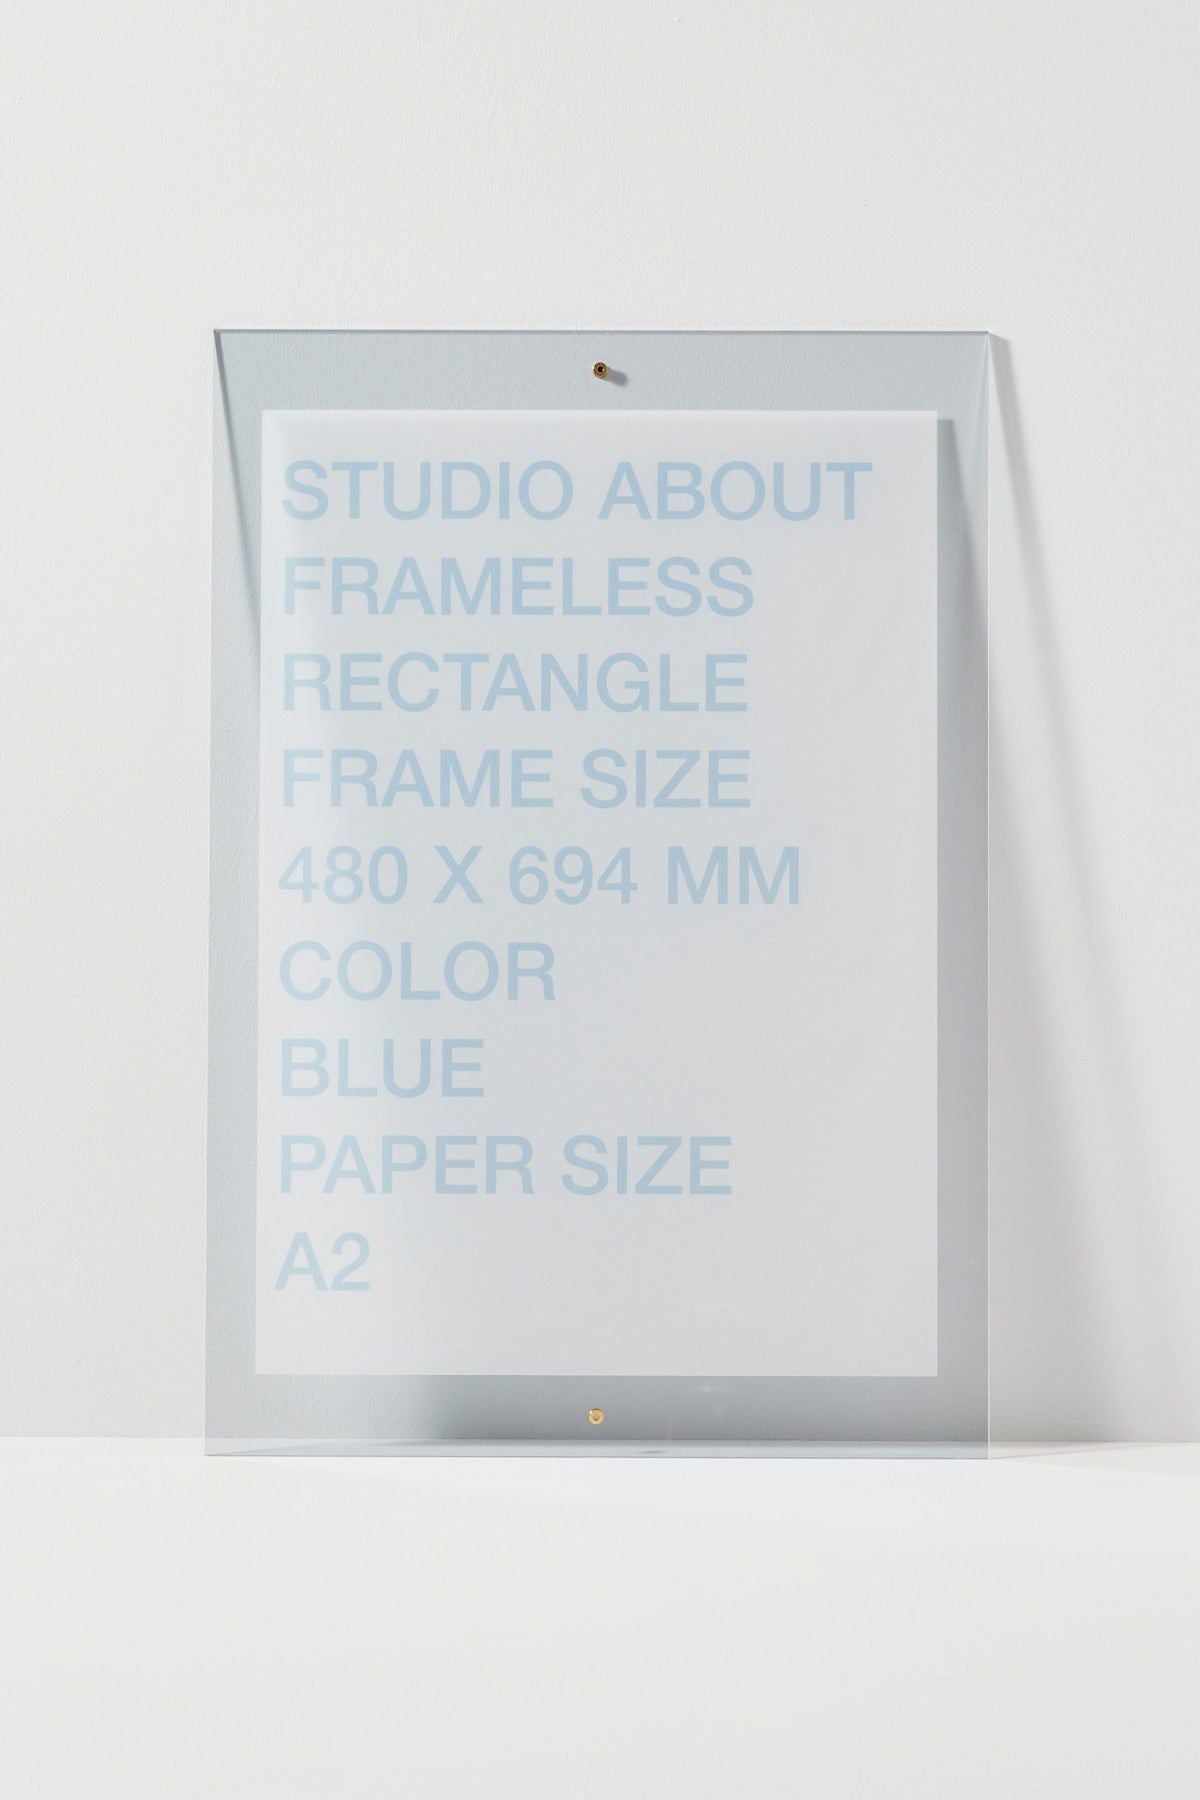 Studio About Frameless Frame A2 Rectangle, Blue